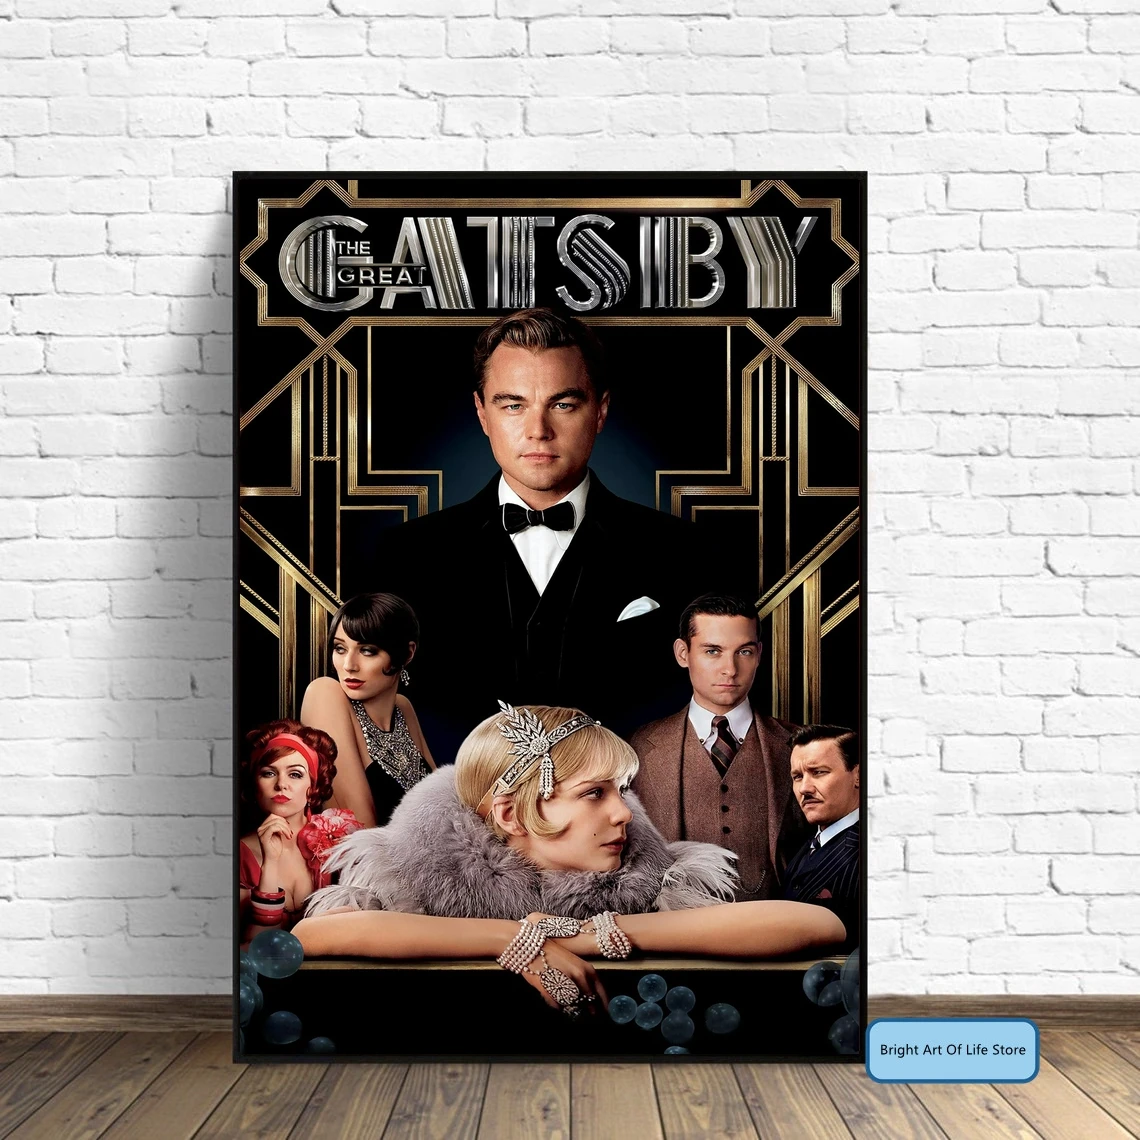 

Leonardo DiCaprio - The Great Gatsby (2013) Movie Poster Cover Photo Print Canvas Wall Art Home Decor (Unframed)